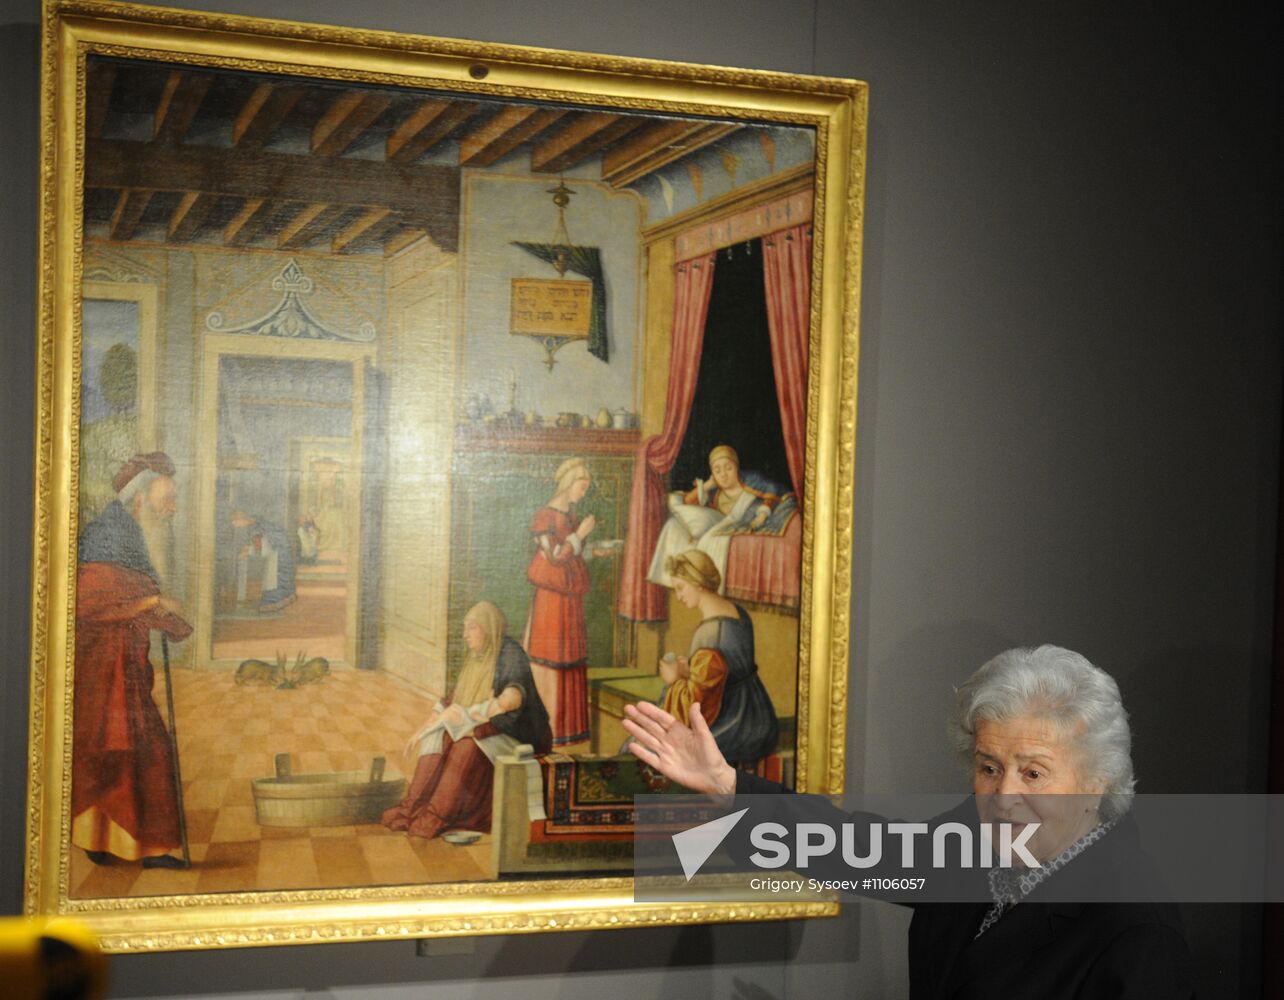 Opening of exhibition "Imaginary Museum" in Pushkin Museum